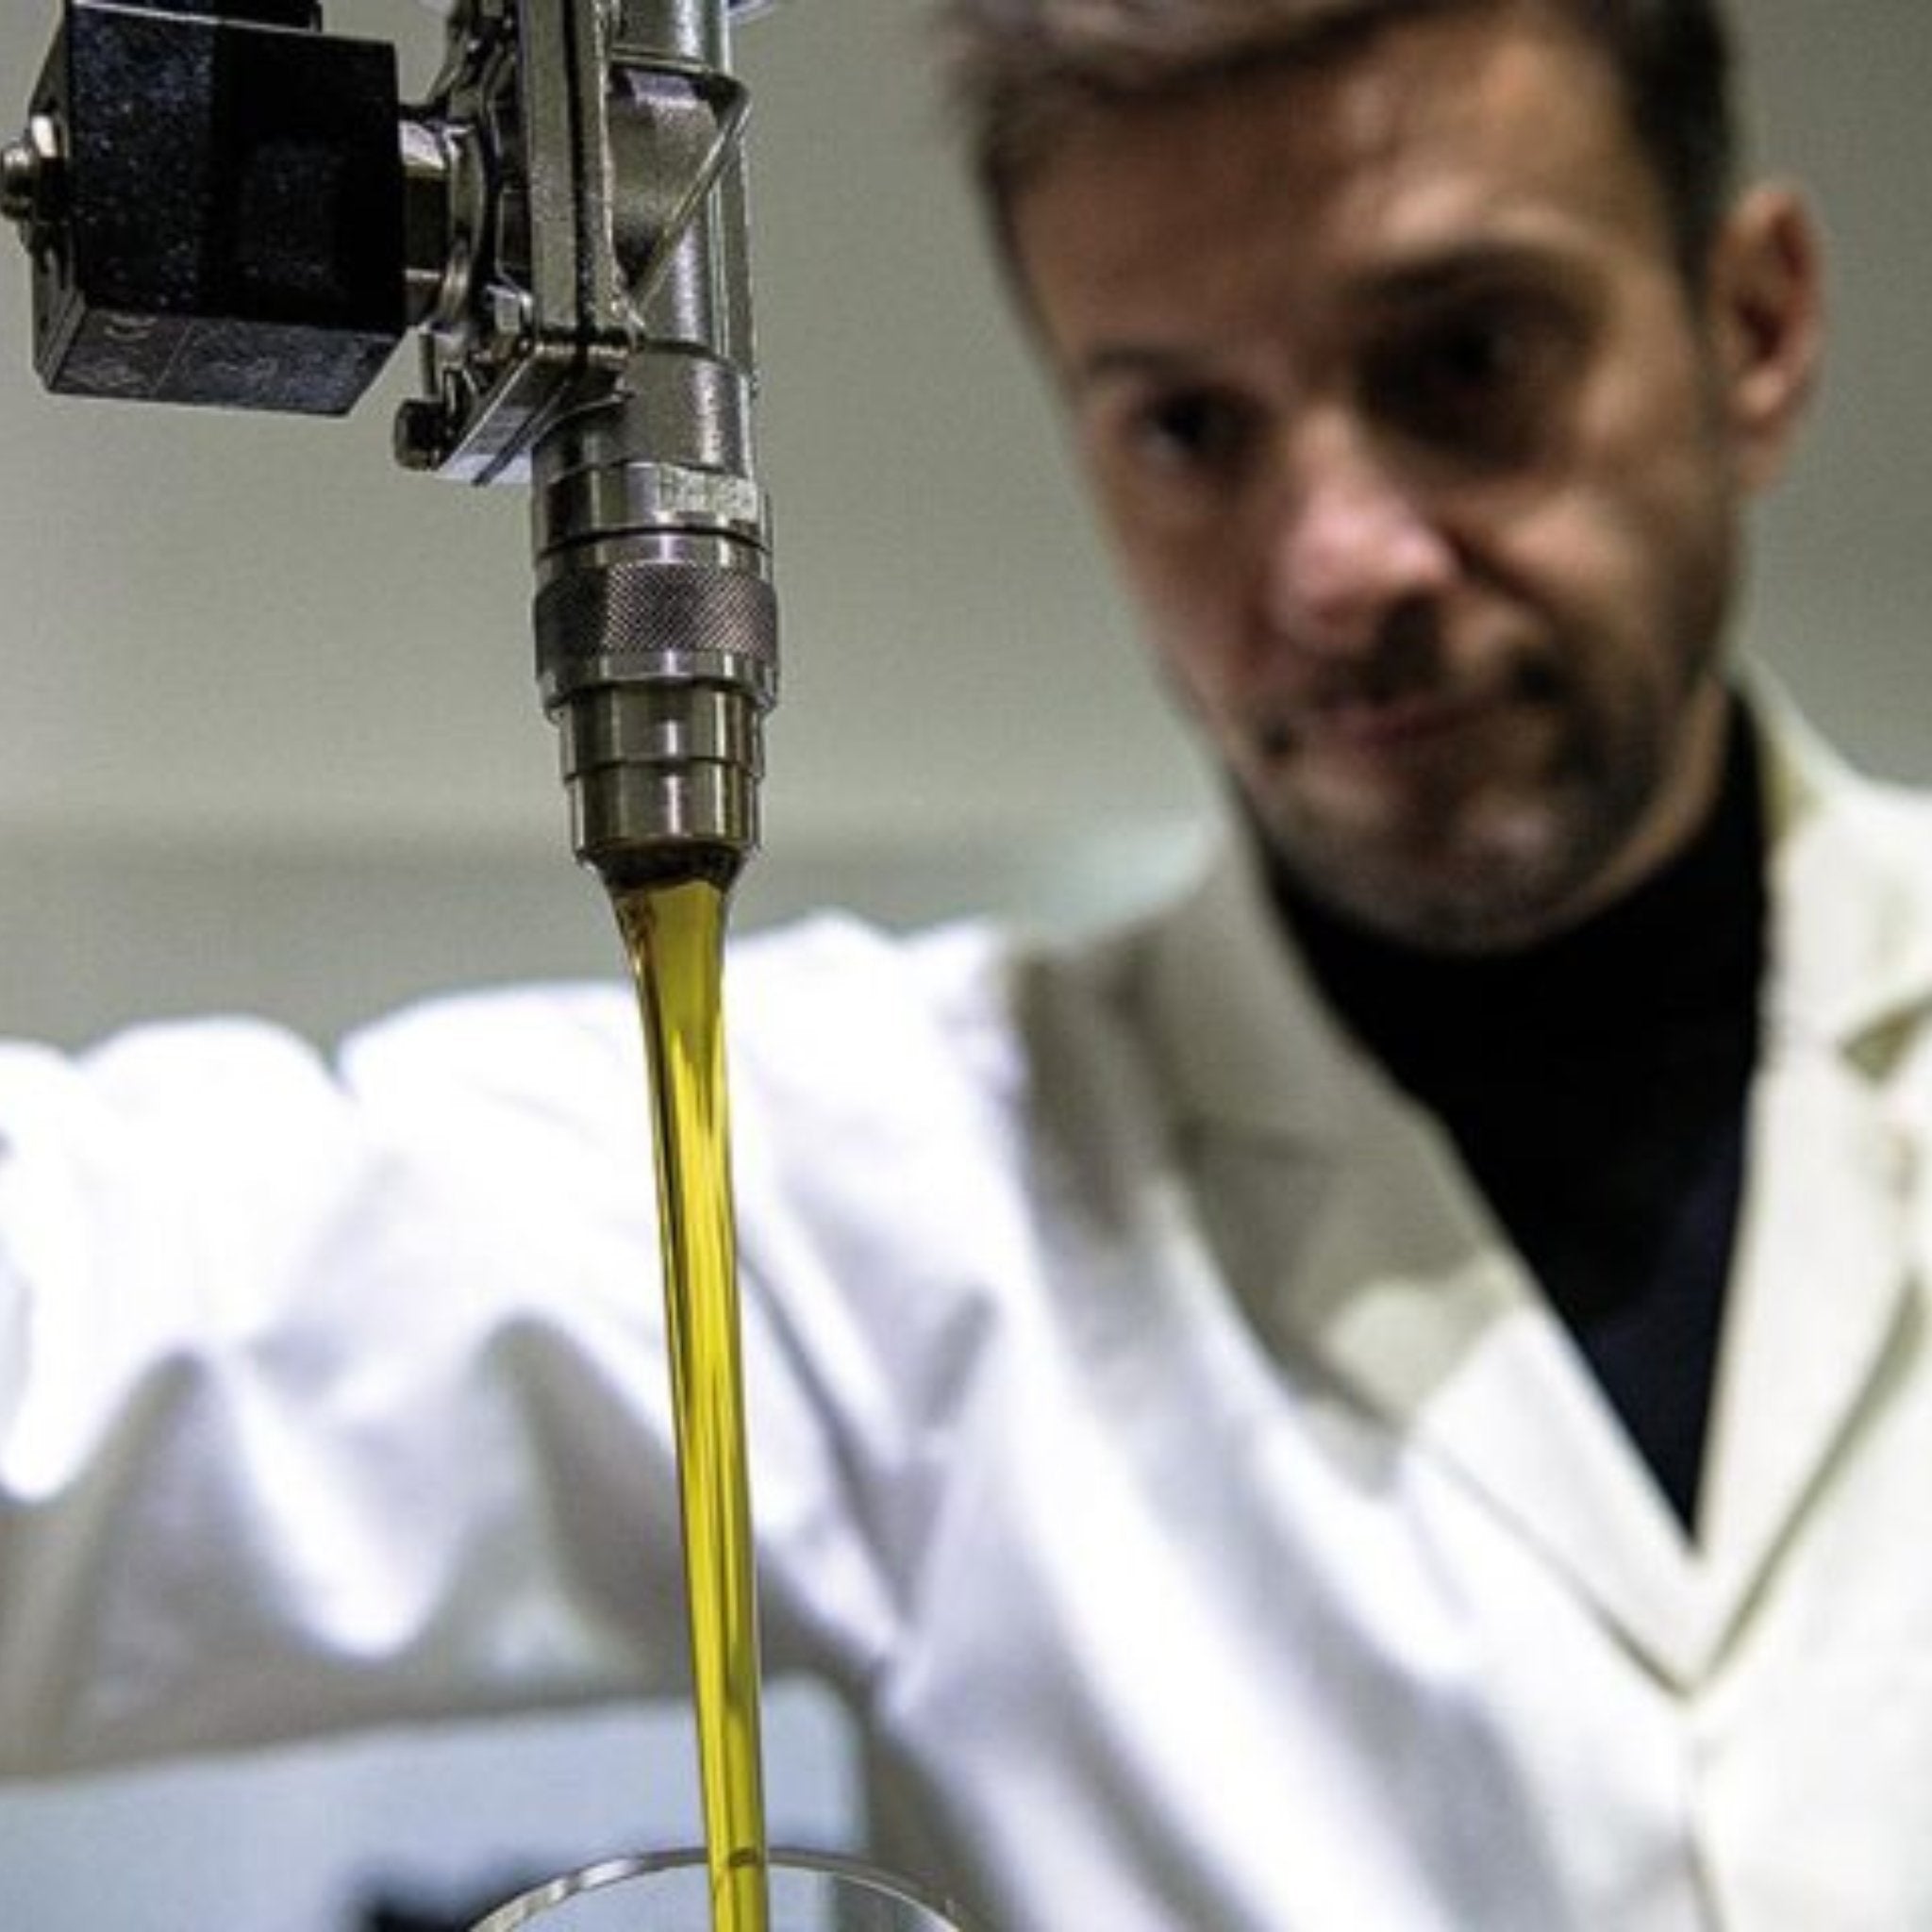 Bio-Olivenöl Pamako Blend